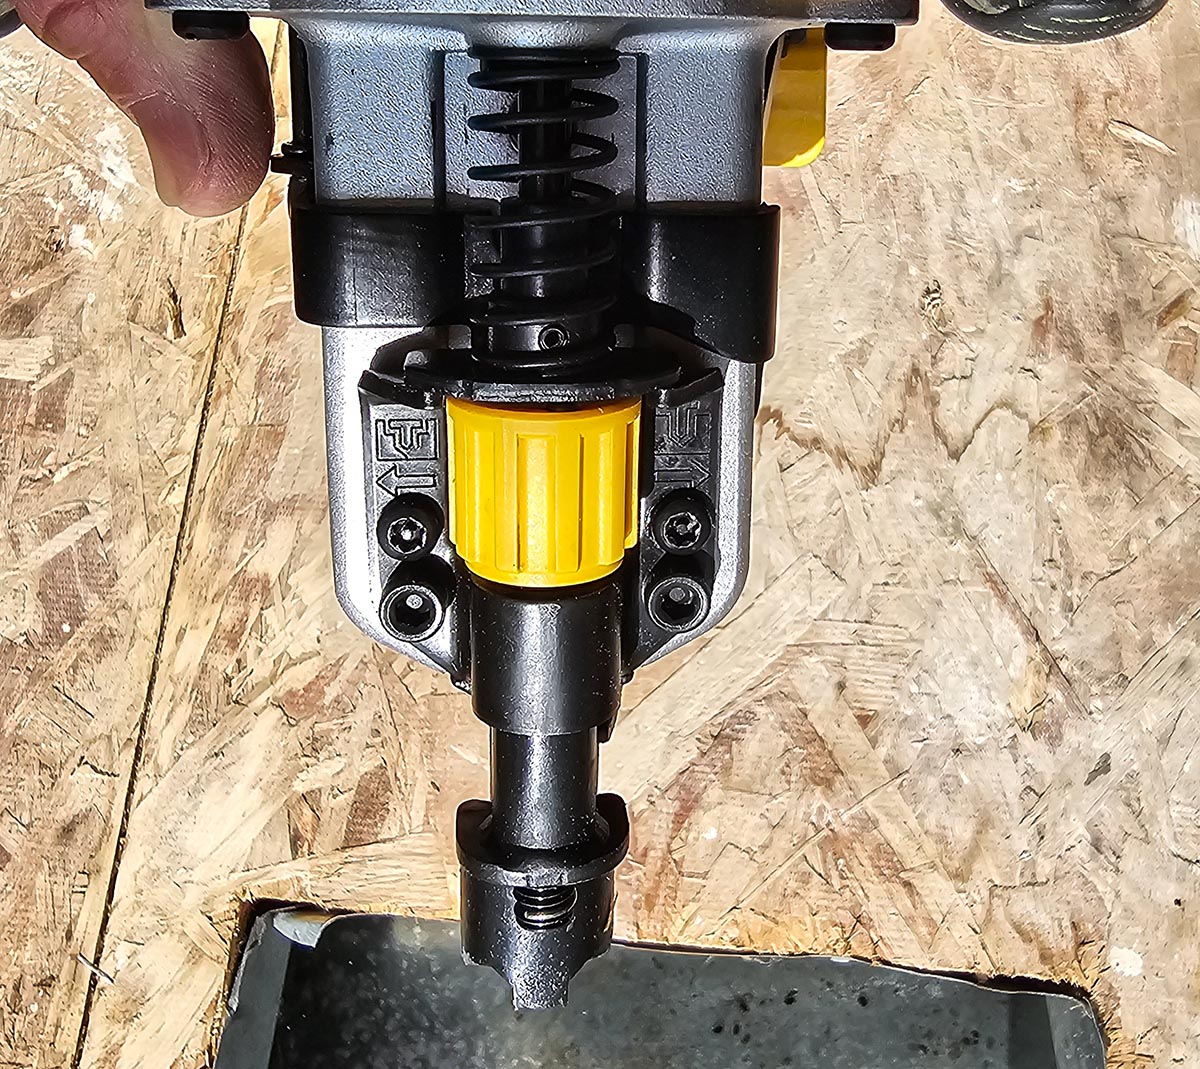 DeWalt Cordless Framing Nailer yellow depth adjustment dial.